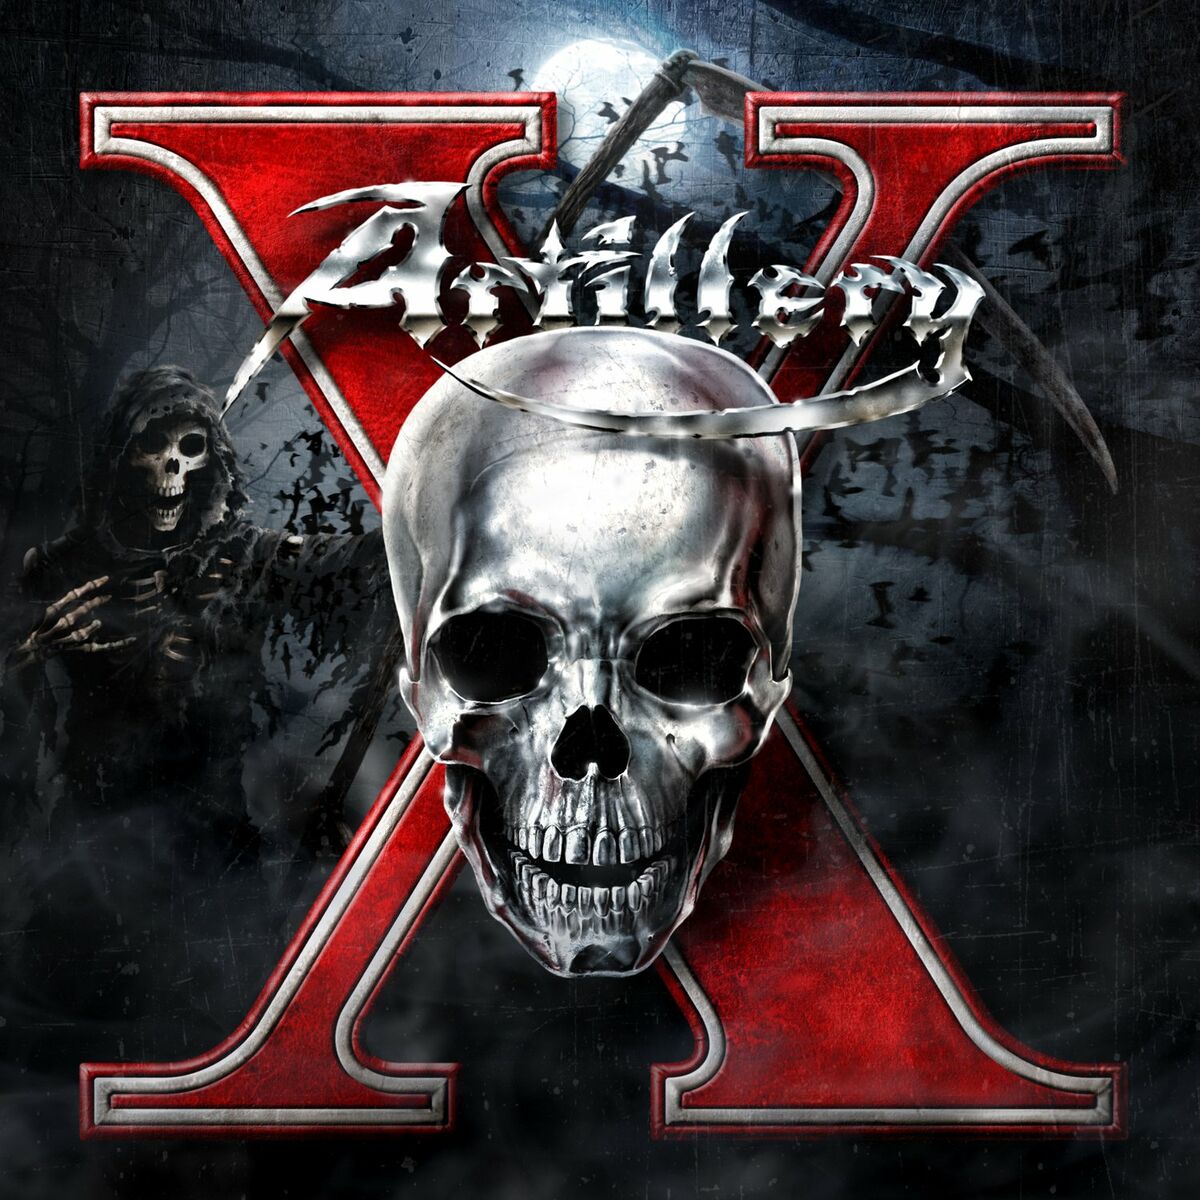 Artillery: albums, songs, playlists | Listen on Deezer